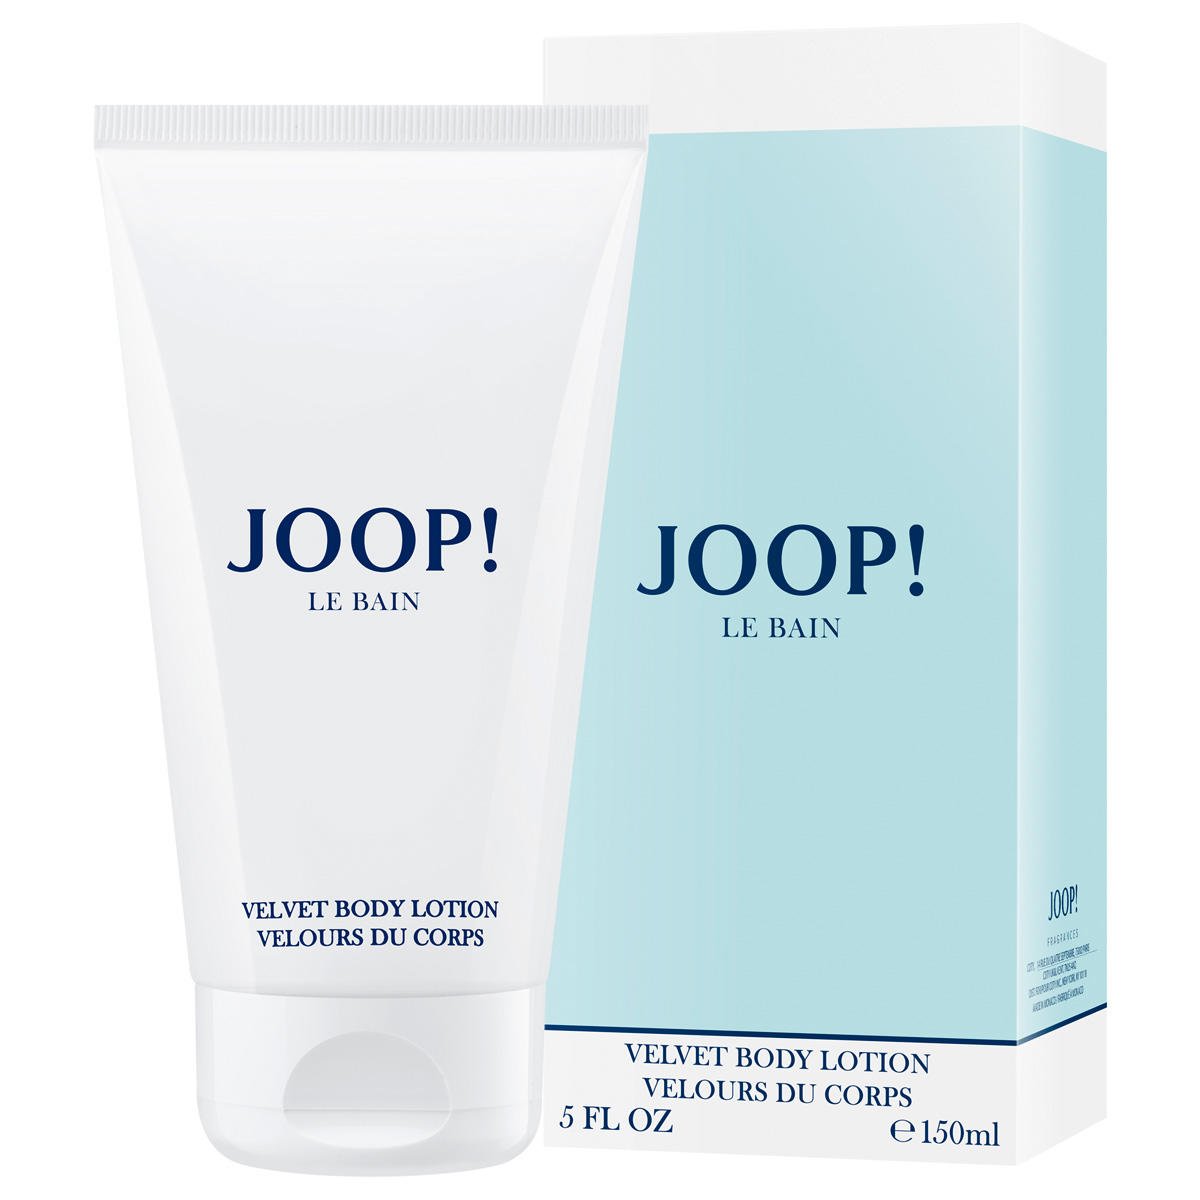 Joop! Le Bain Velvet Body Lotion | My Perfume Shop Australia